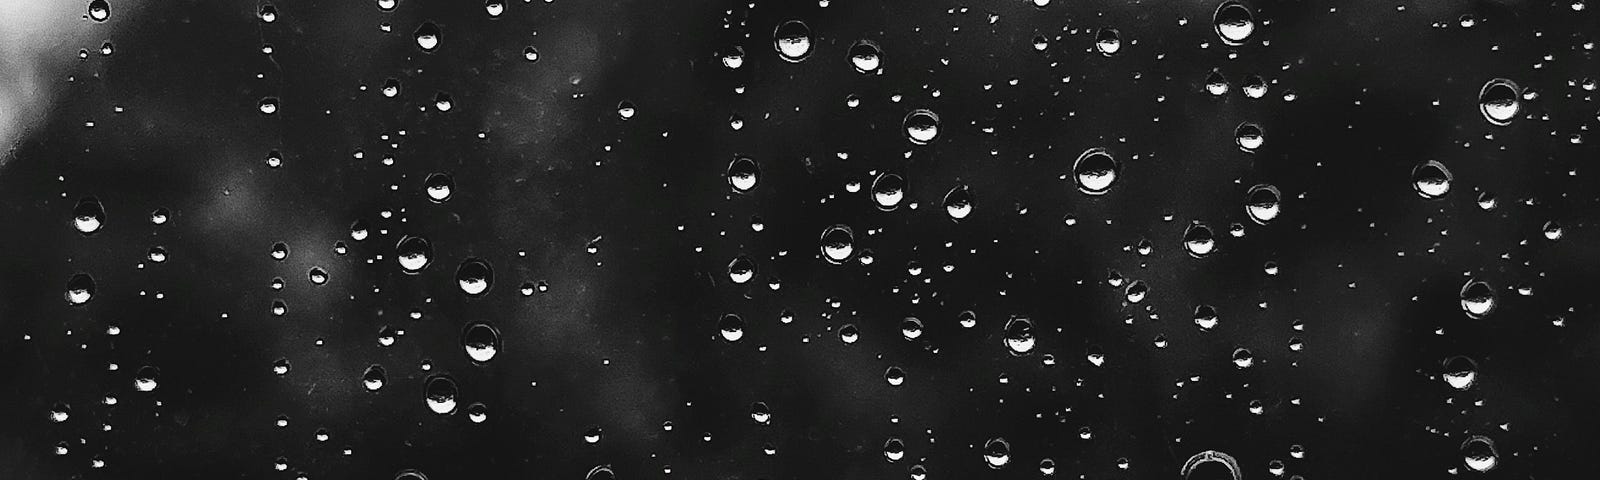 raindrops on a window, monochrome